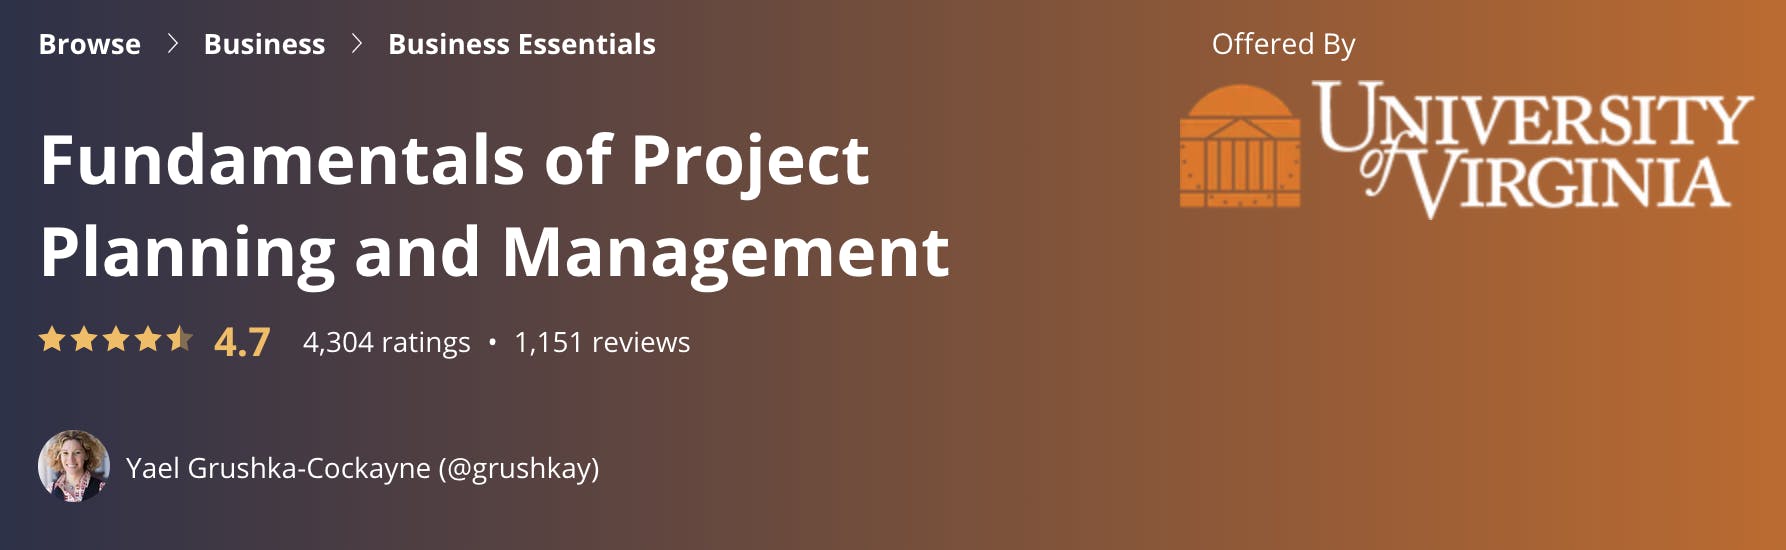 Project Management Training Free - University of Virginia